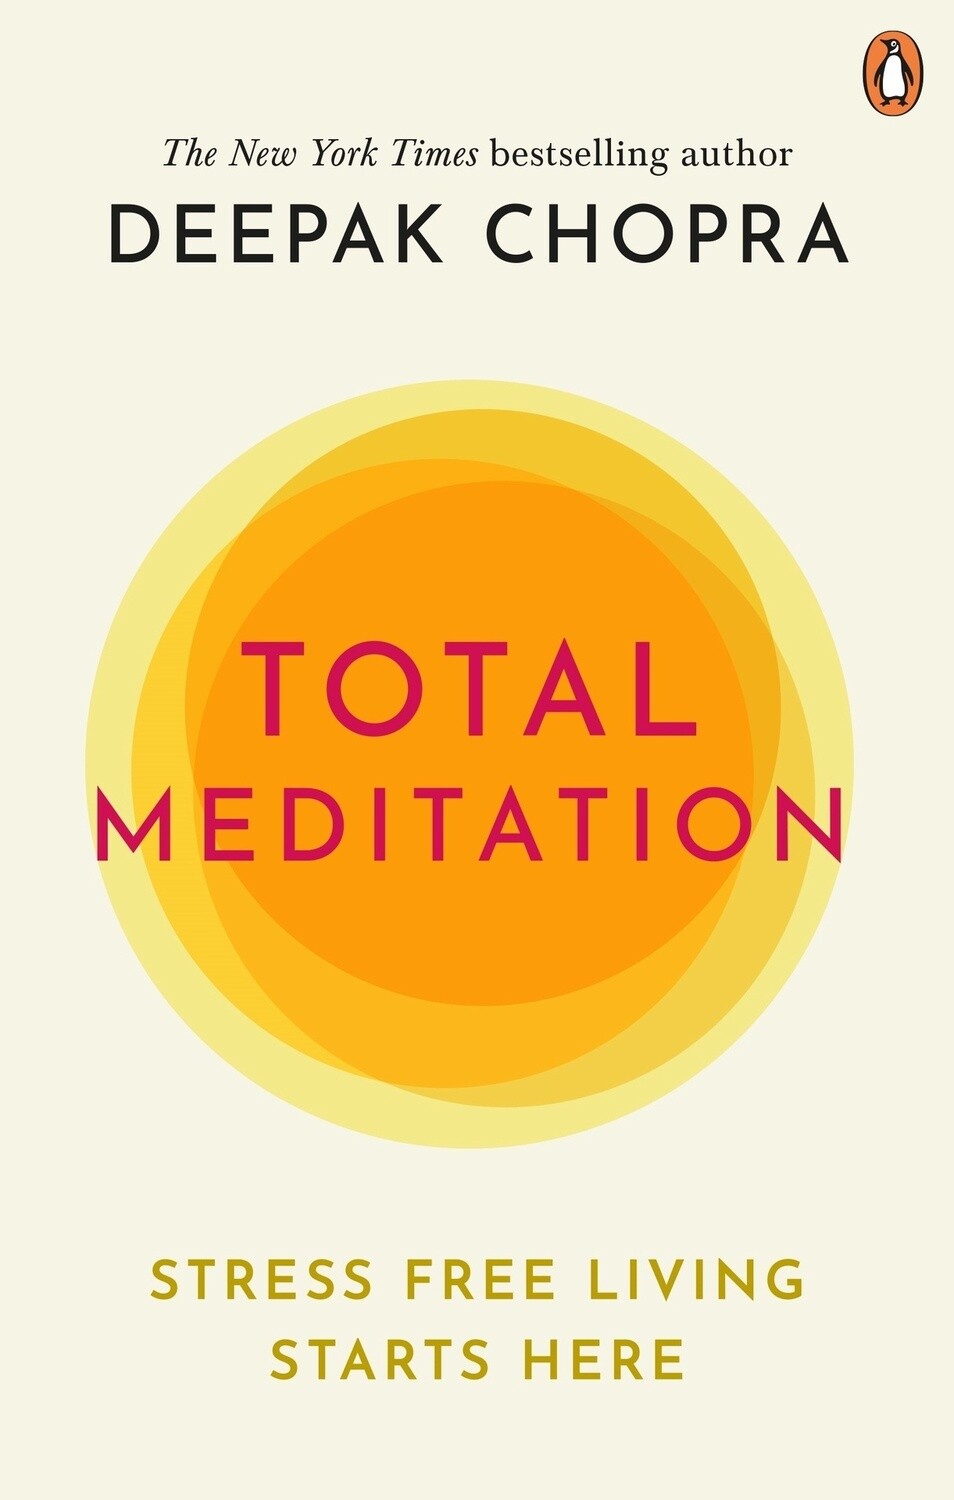 Total Meditation by Deepak Chopra